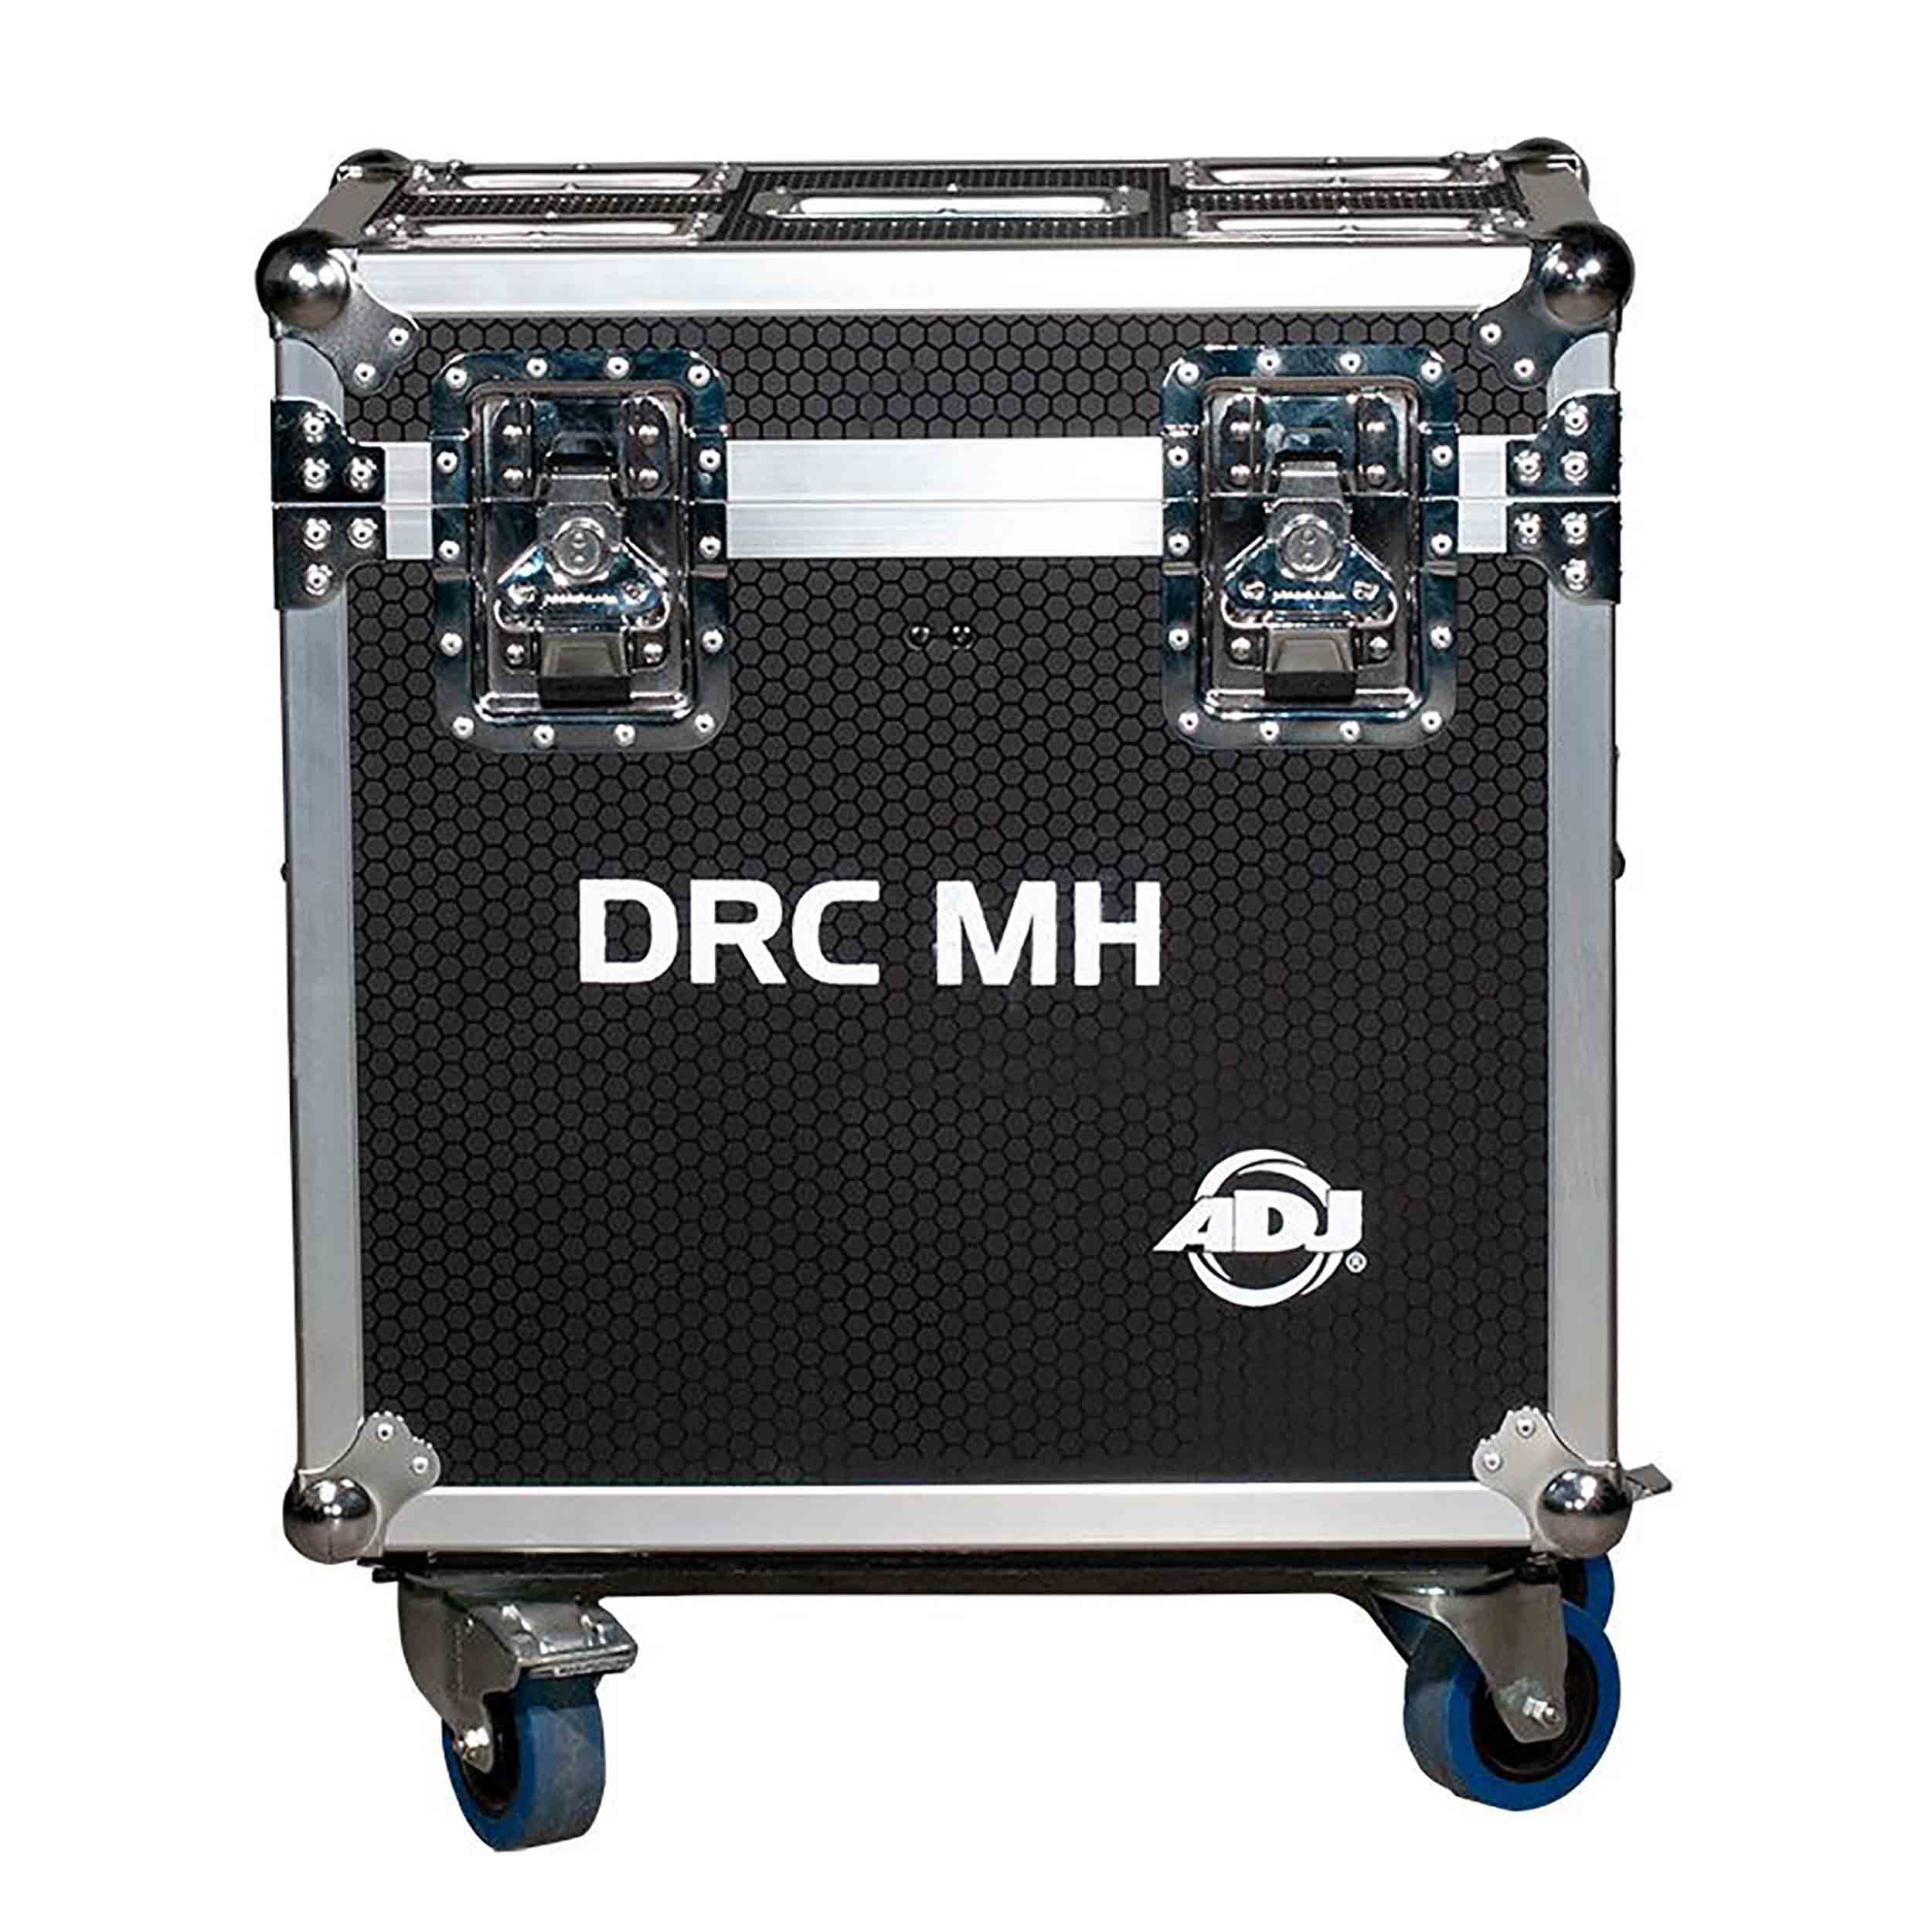 ADJ DRC MH, Dual Road Case for Focus Spot 3Z, 4Z, or Vizi Beam RXONE - Black by ADJ